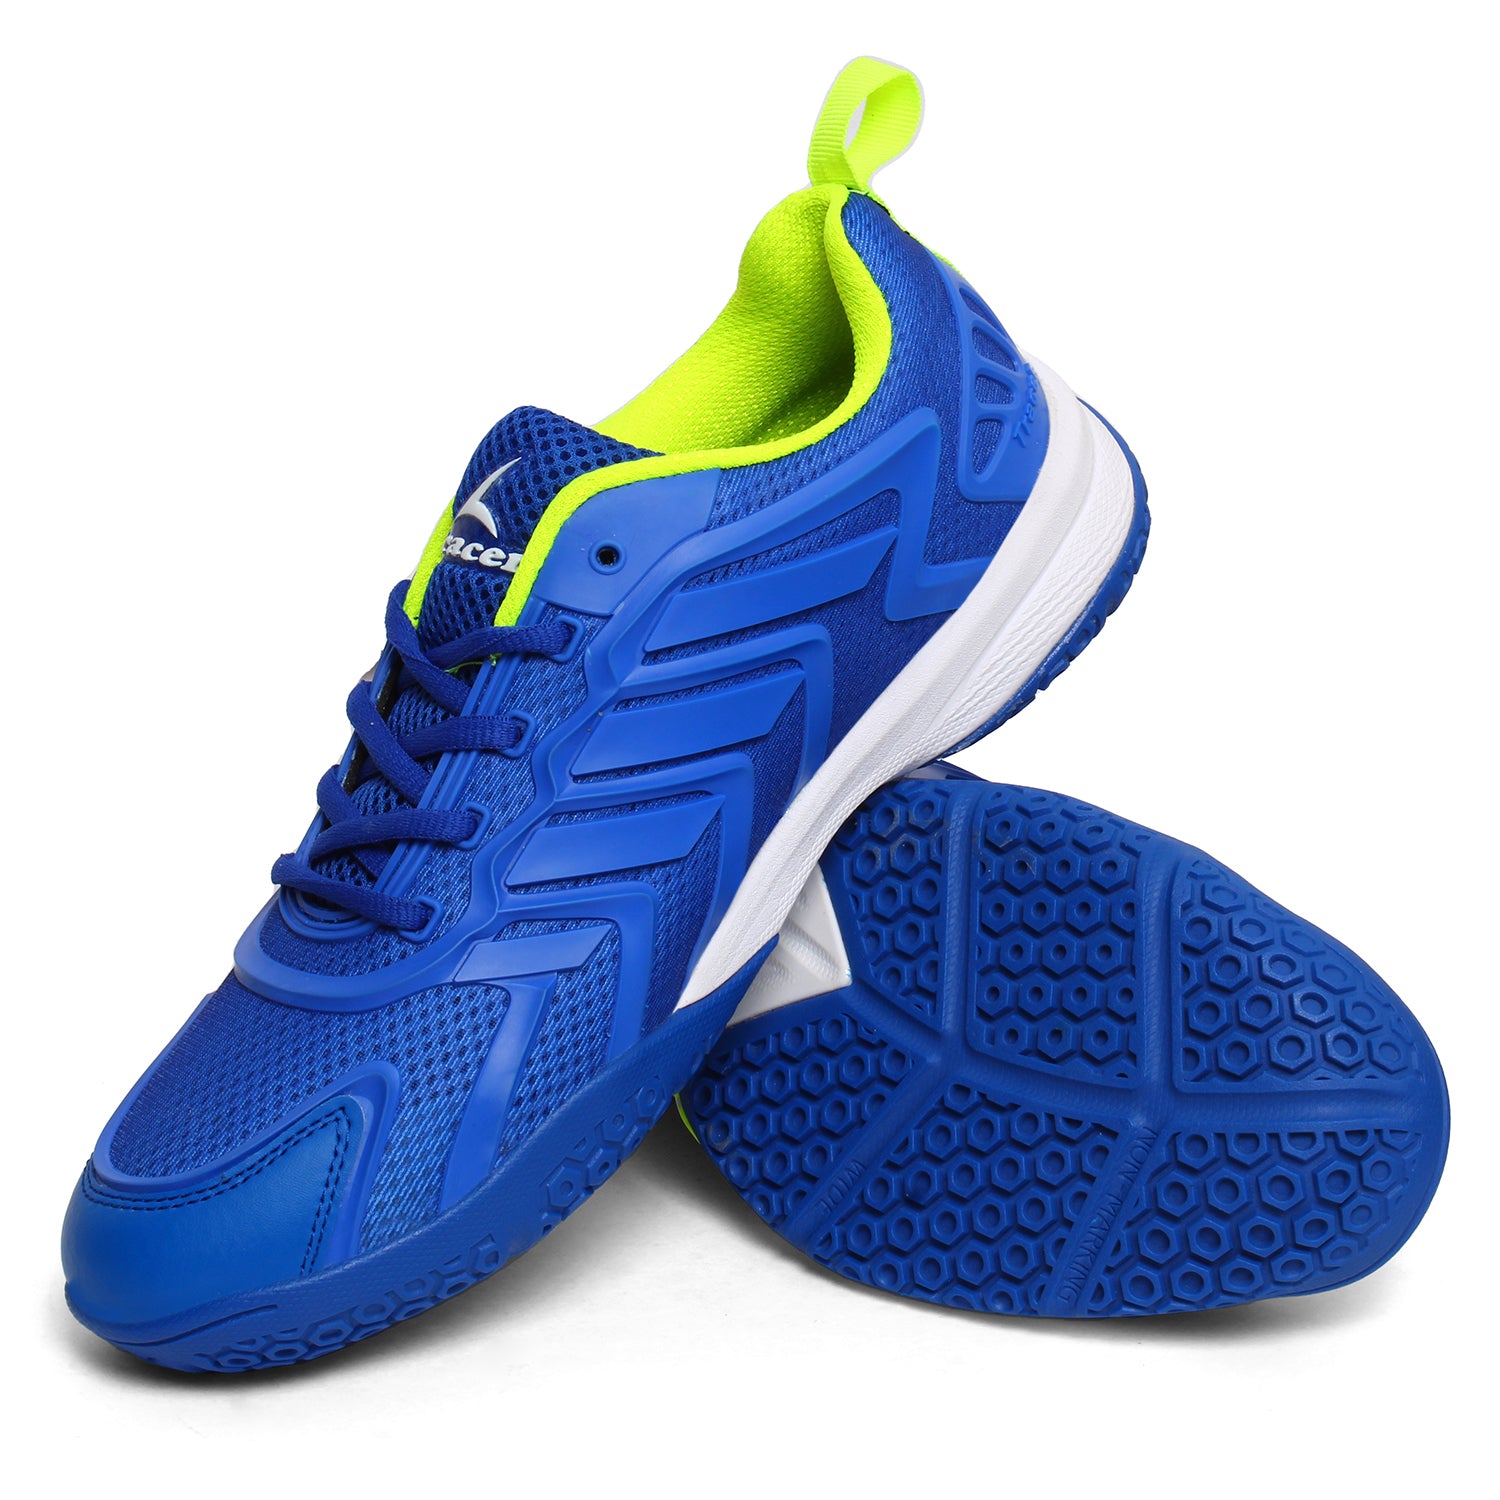 Men's Sport Shoe's Tracer India Sneaker's R Blue